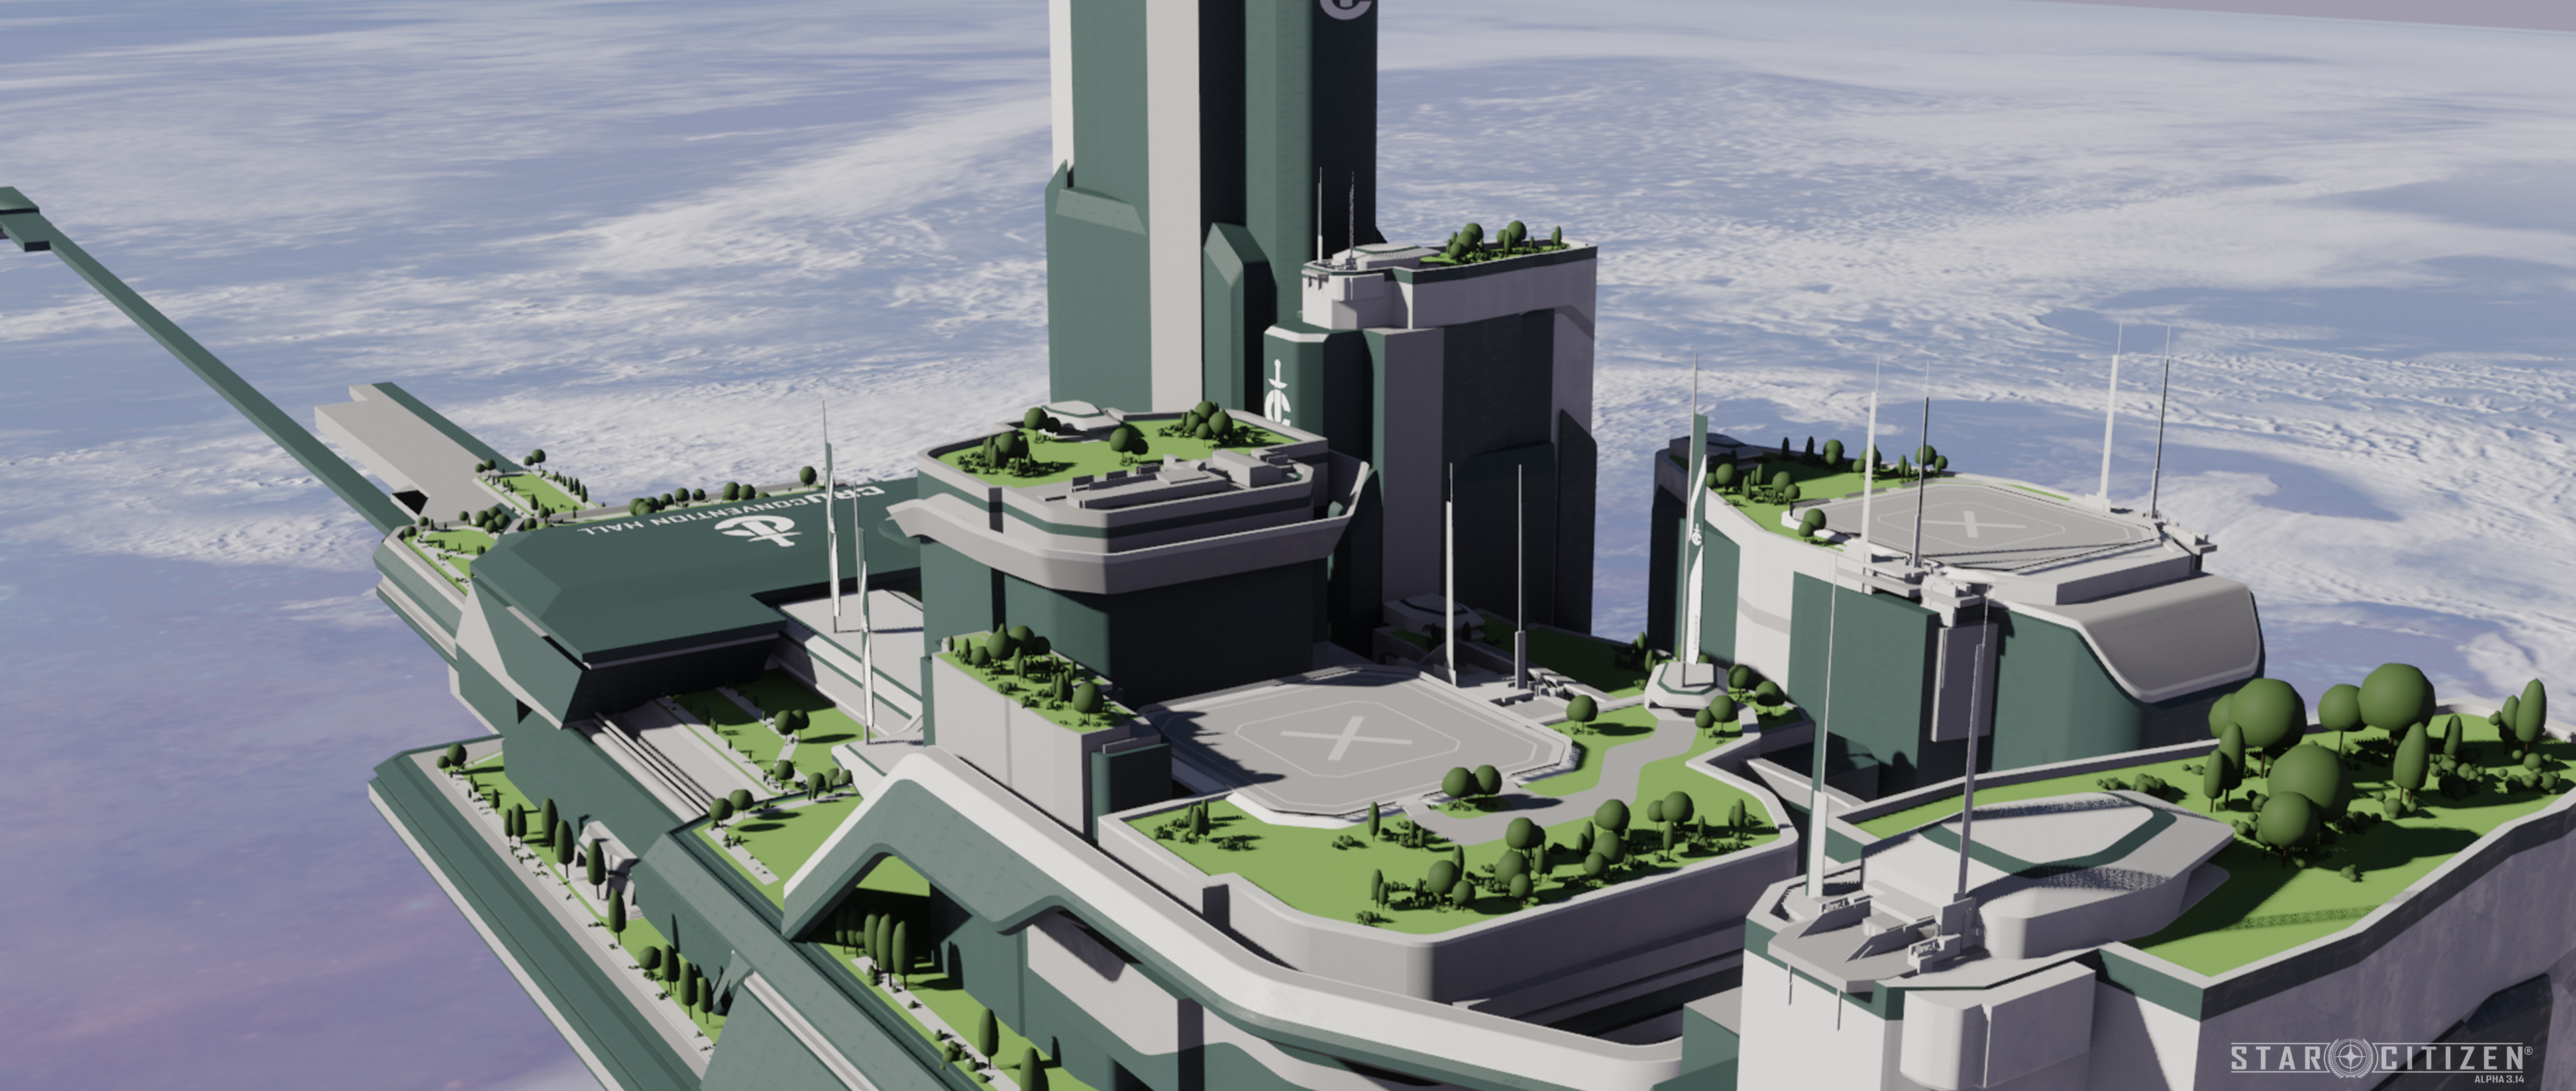 Habitation platform concept